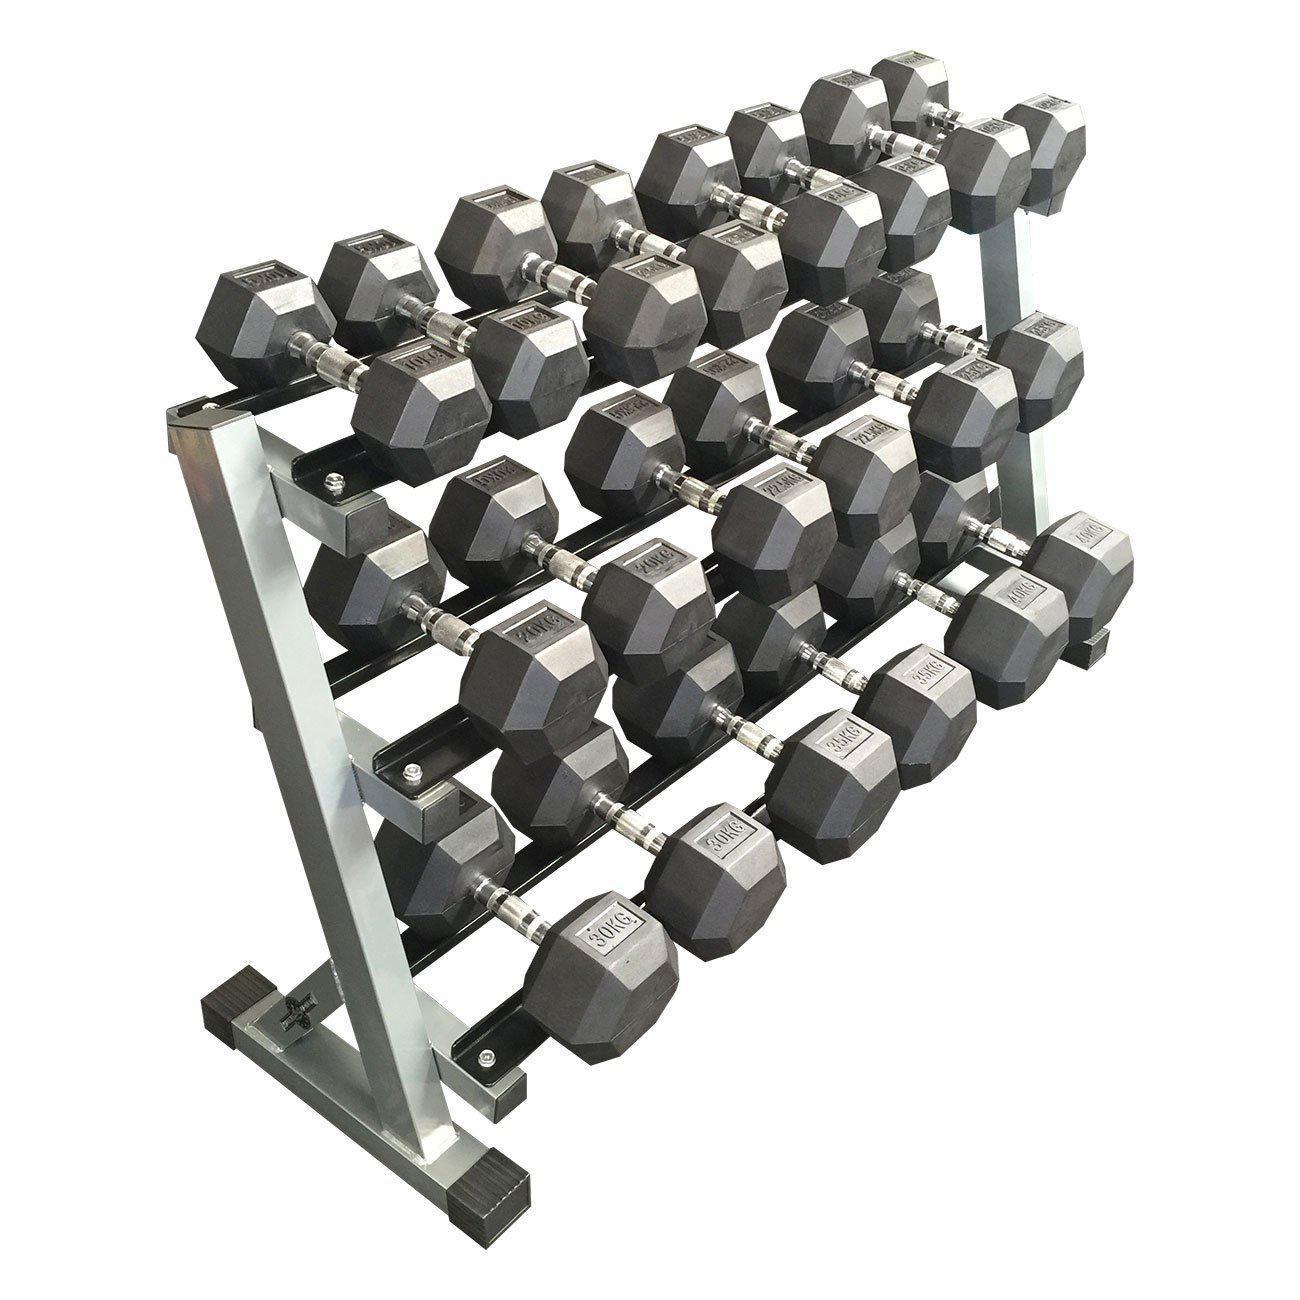 Cheap Rubber Hex dumbbell 10kg - 40kg 3 tier rack _Gym Direct-Rubber Hex Dumbbell Package-Gym Direct